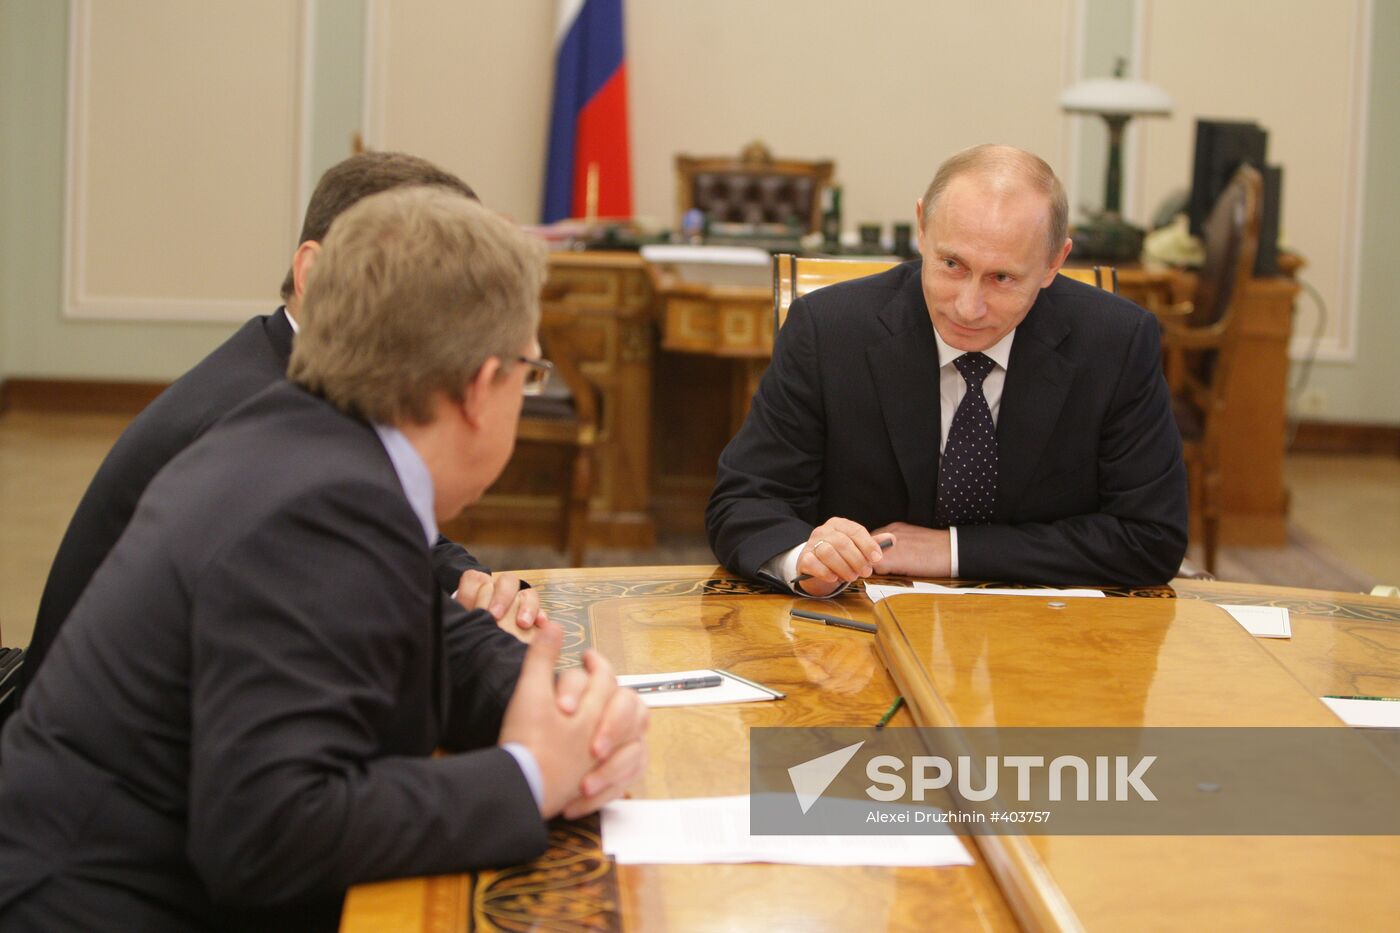 Vladimir Putin. Meeting. Novo-Ogaryovo